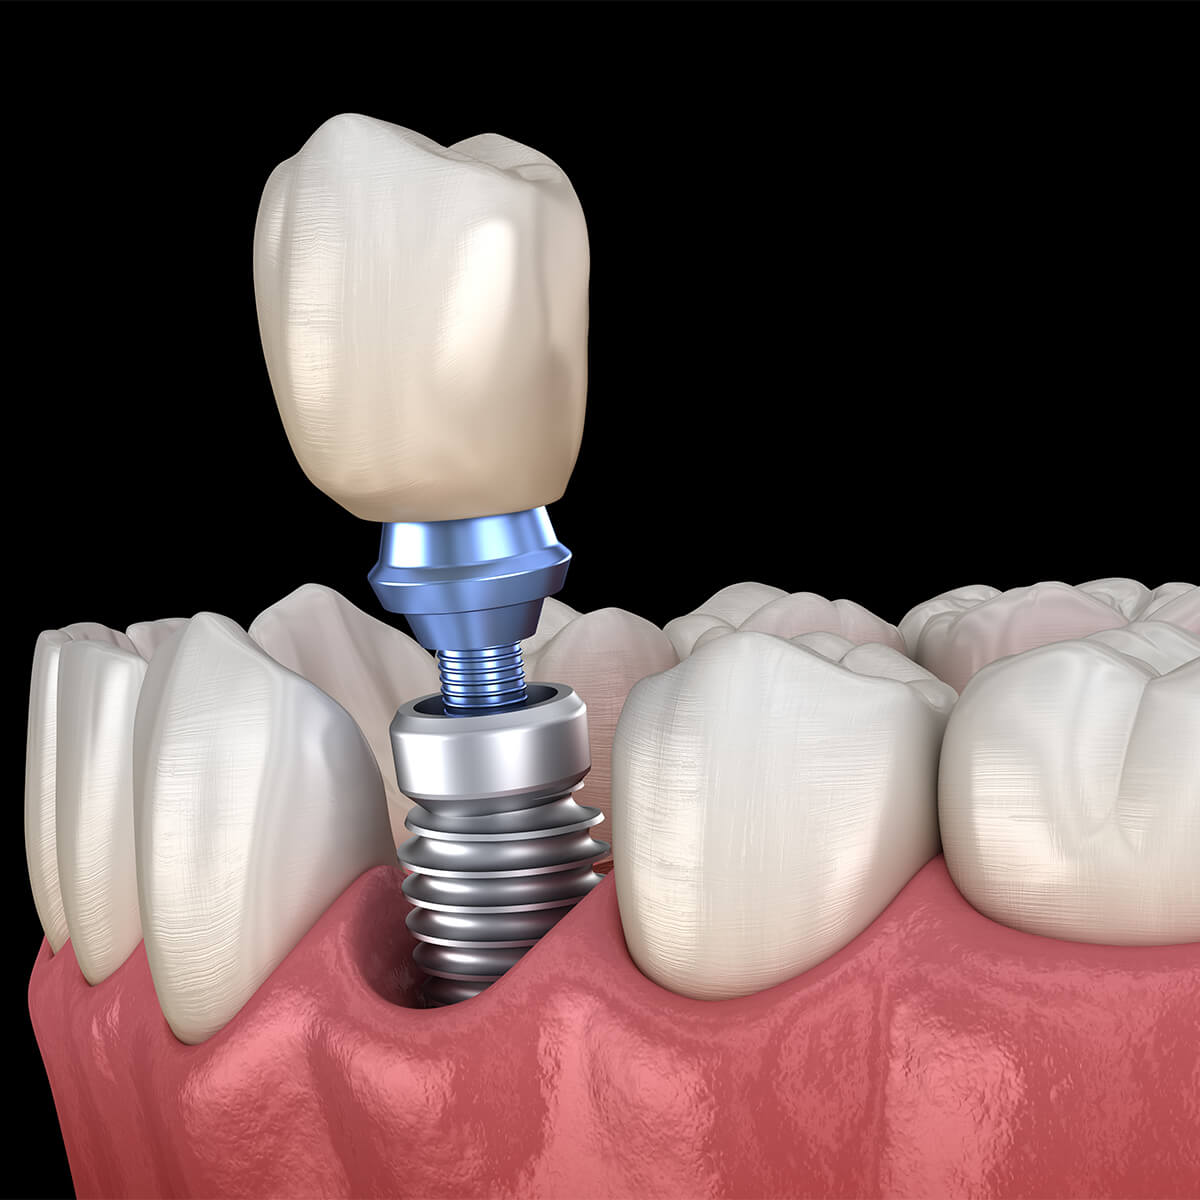 Biocompatible Dental Implants in San Diego CA Area